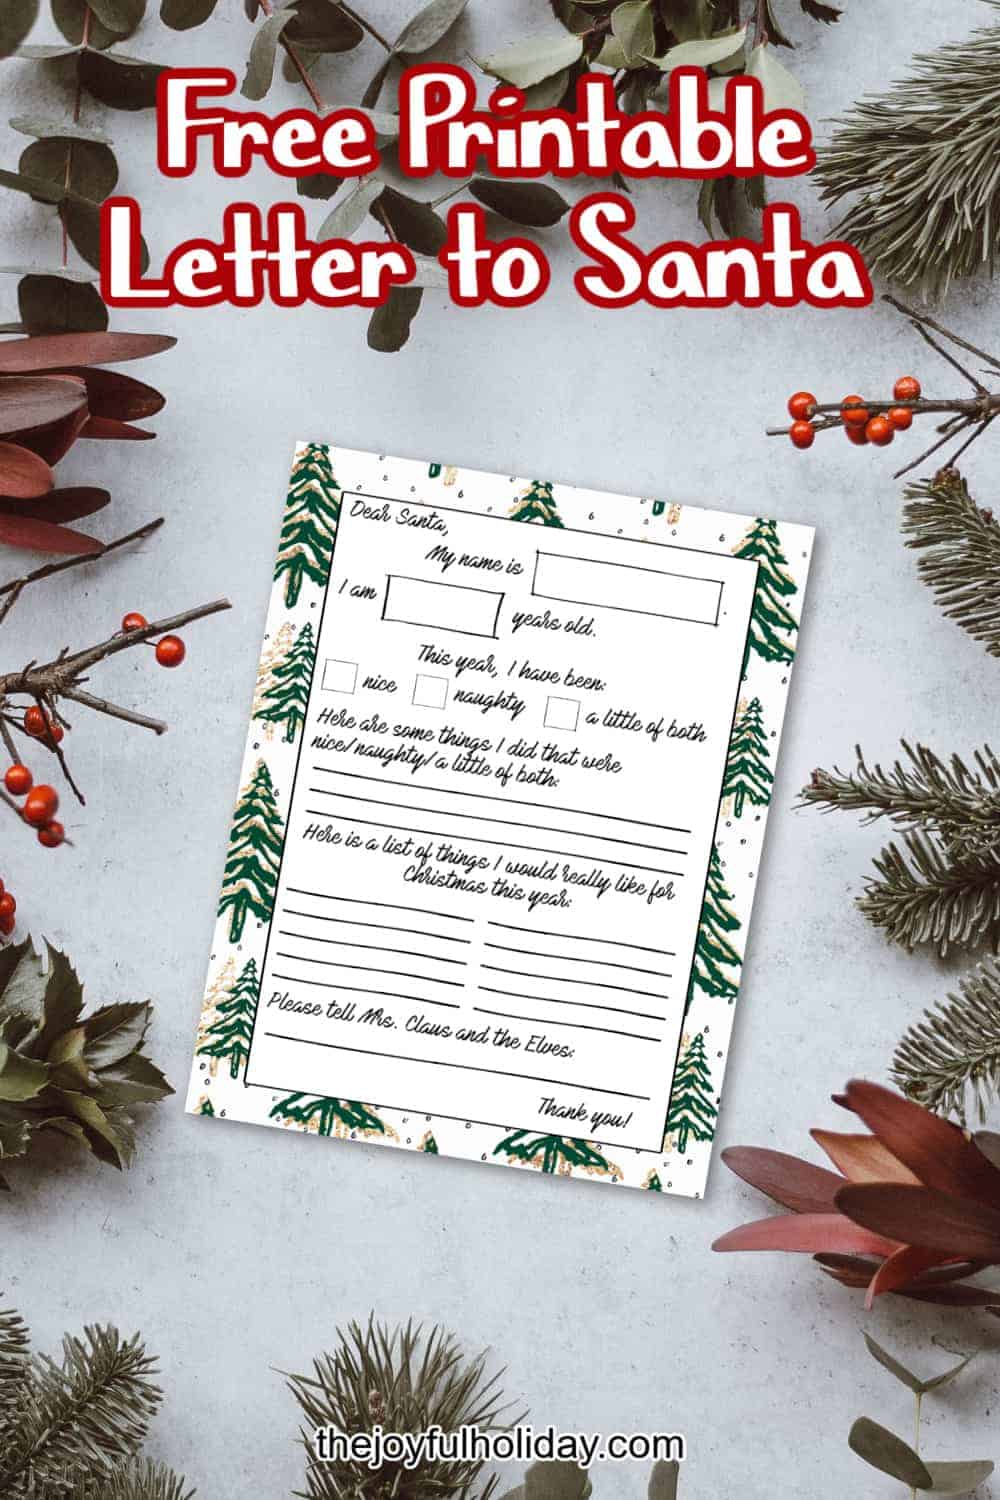 Letter to Santa 2 Pin thejoyfulholiday